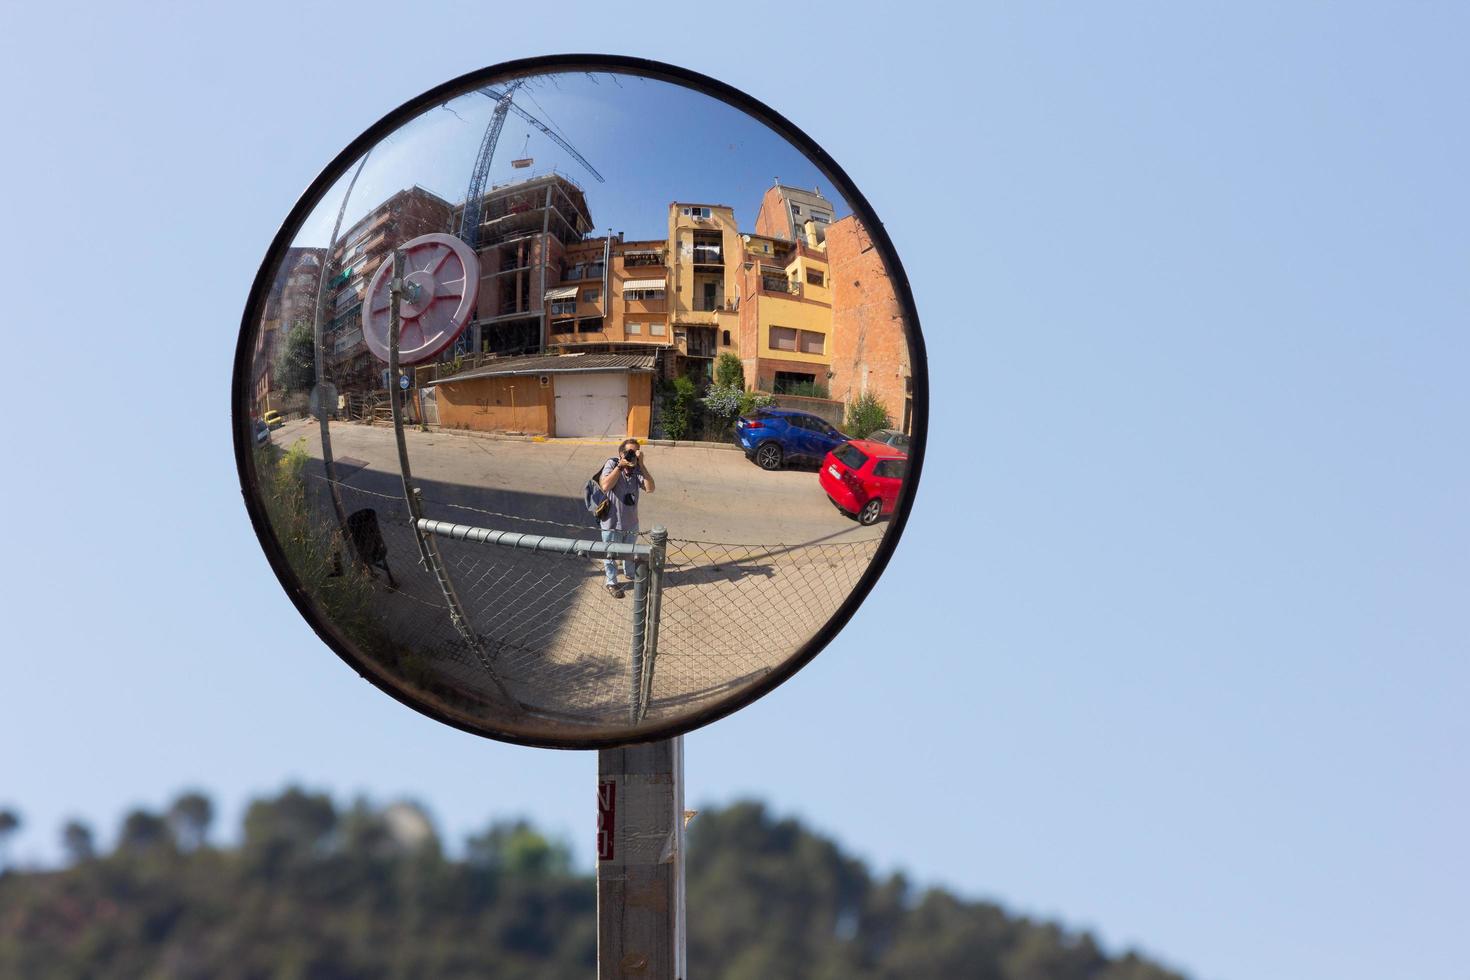 Mirrors for drivers to see around corners photo